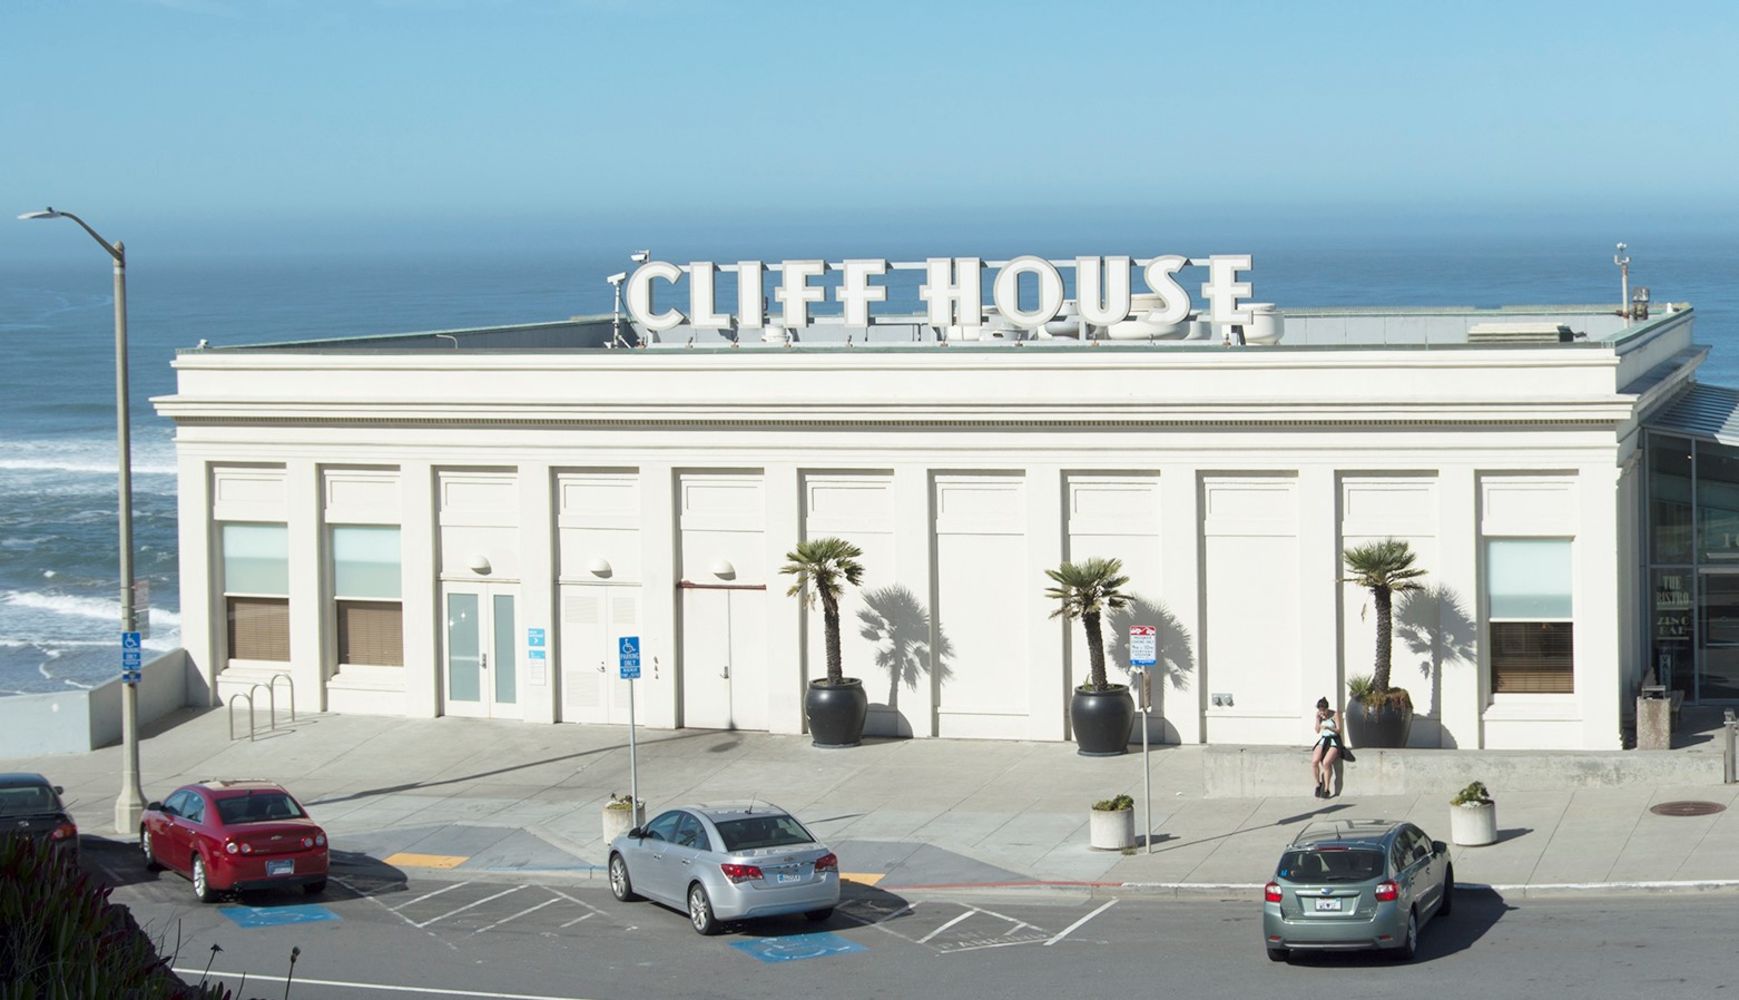 Day 1 - The Cliff House - San Francisco Landmark